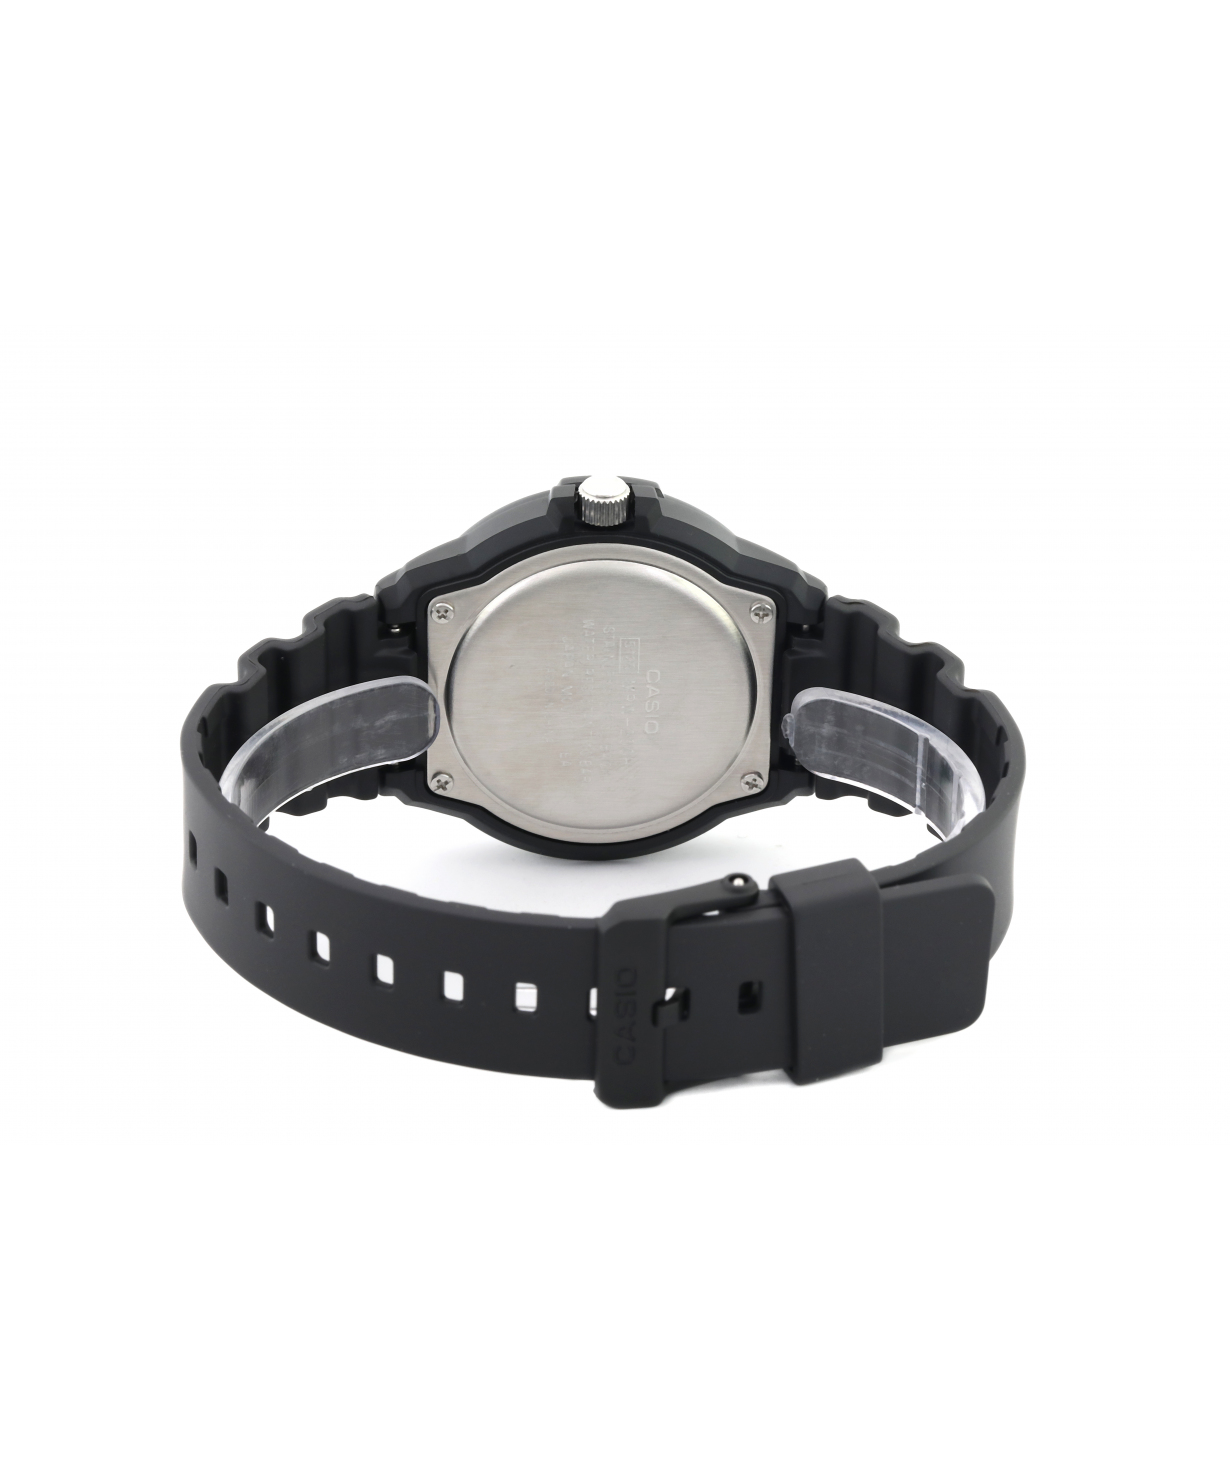 Wristwatch `Casio` MRW-200H-1B2VDF